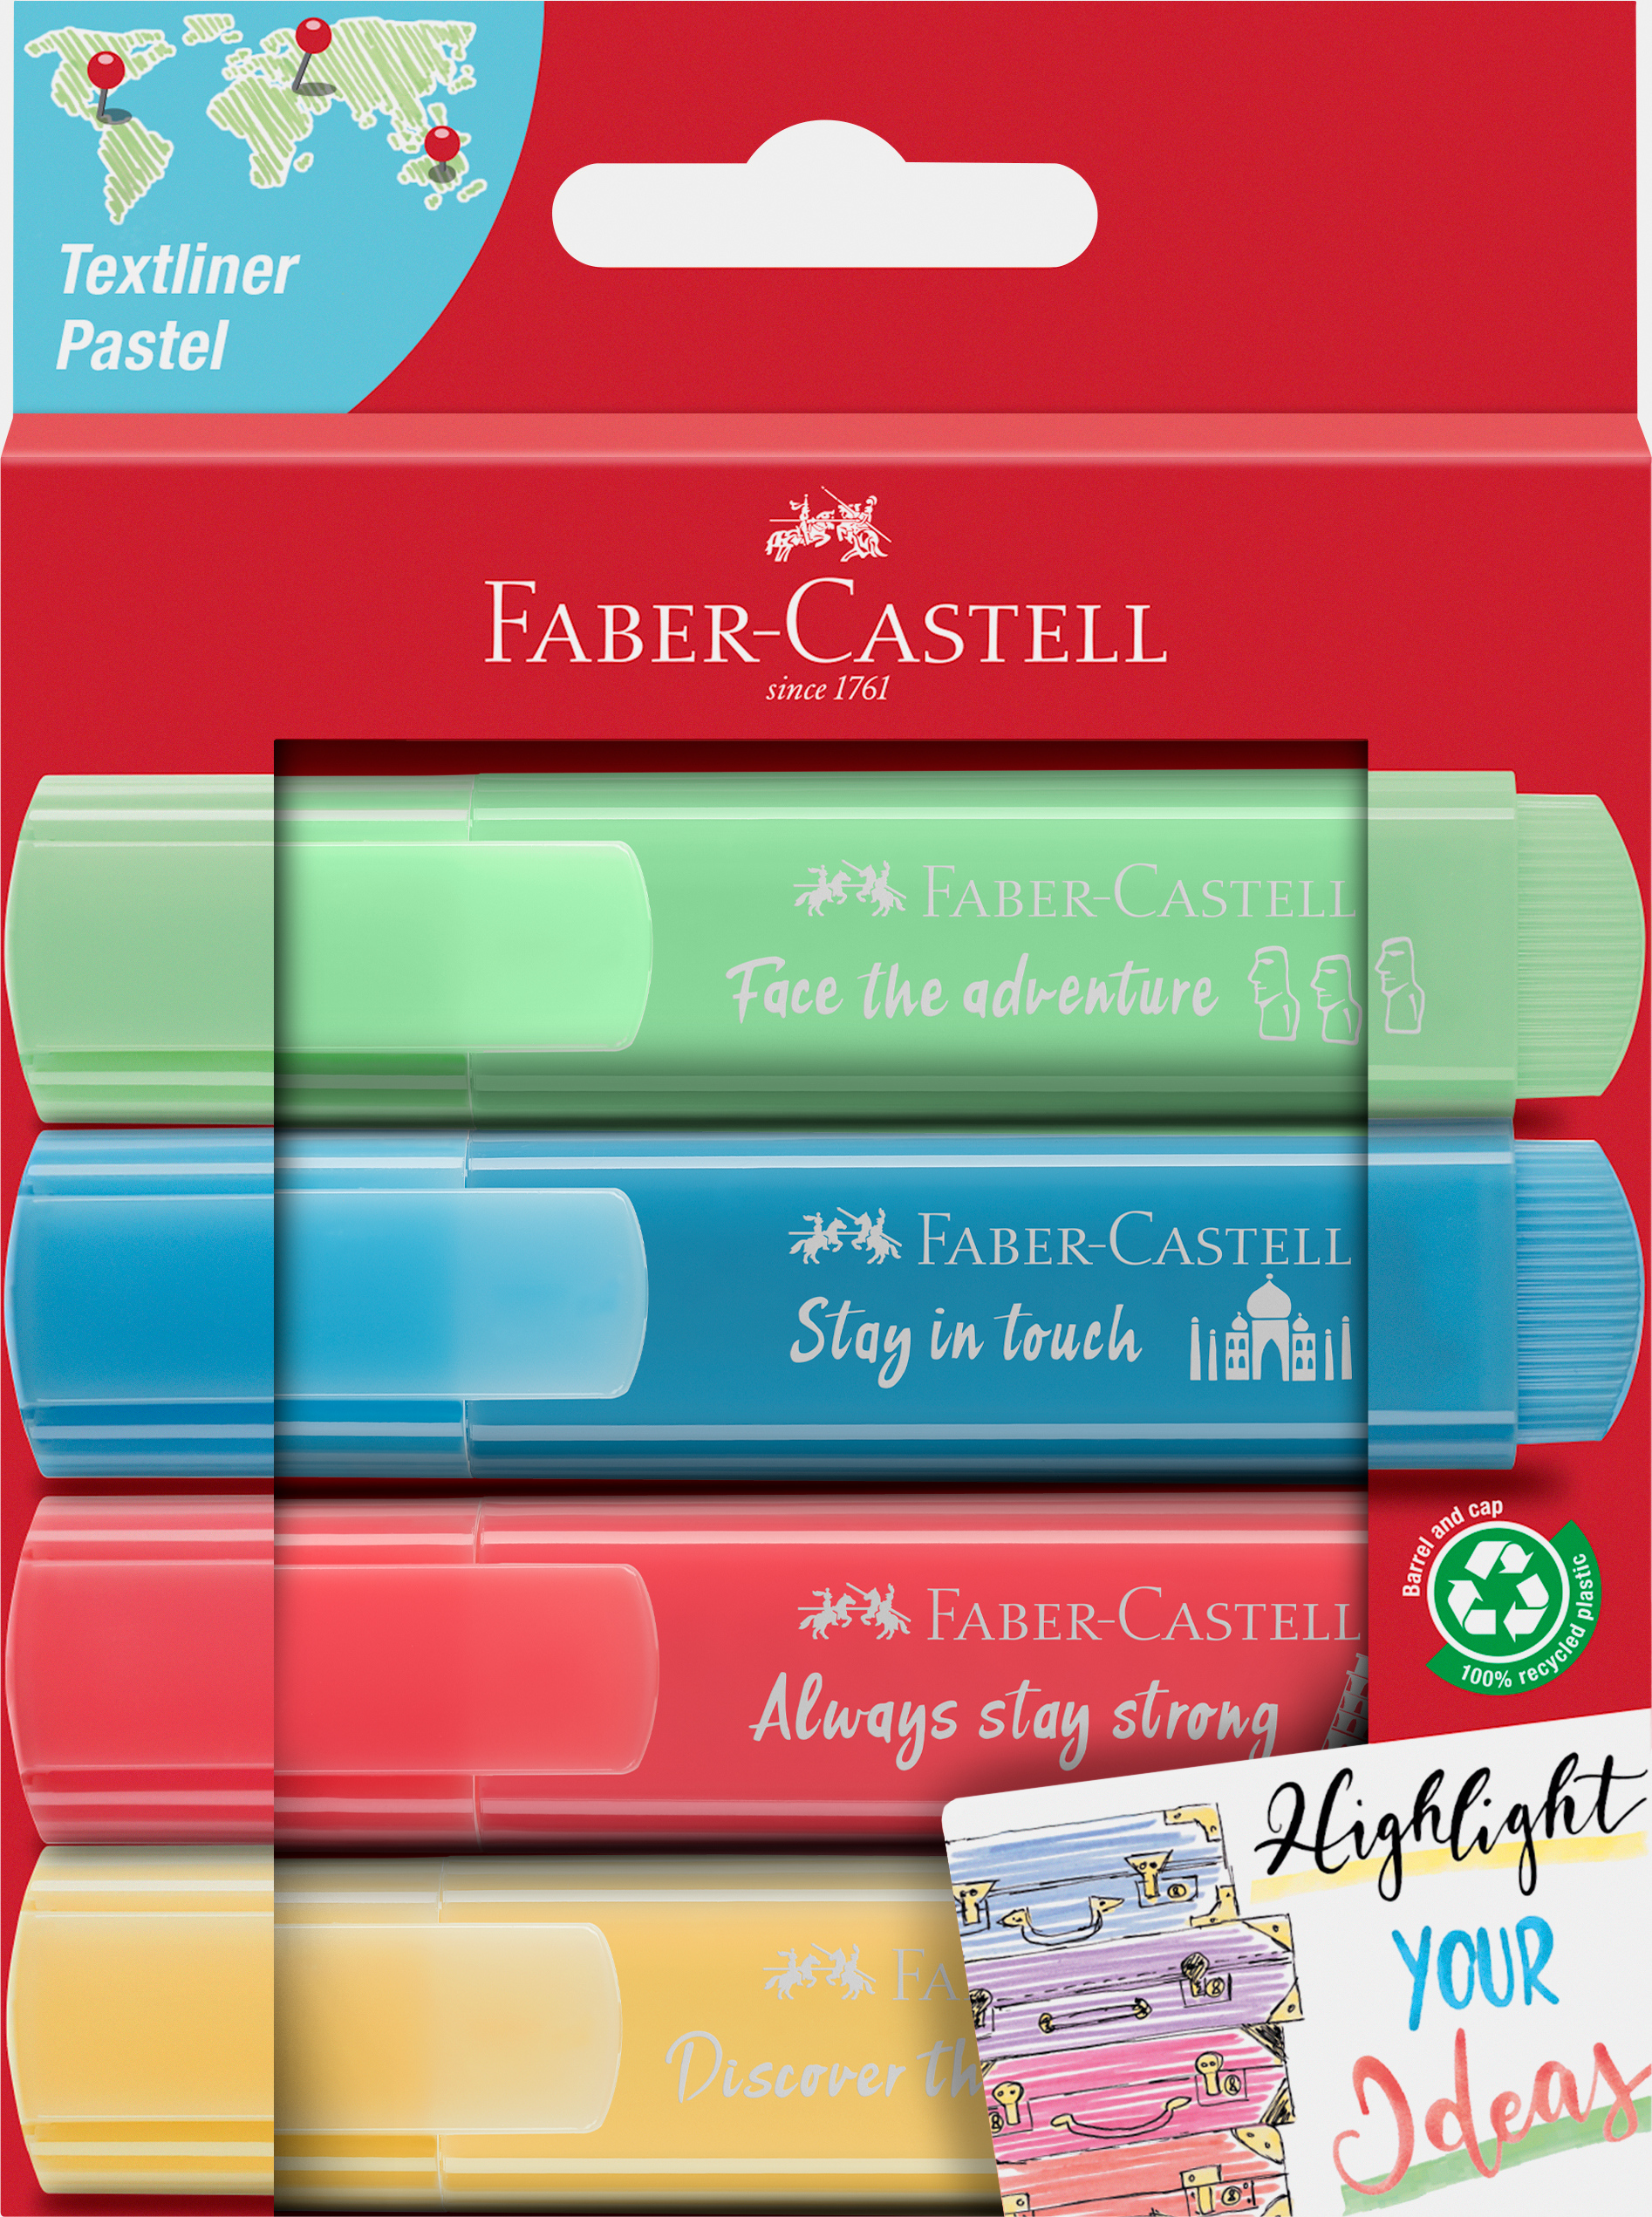 FABER-CASTELL Textmarker 46 Pastell 1.2-5mm 254625 multicolor 4 pcs.